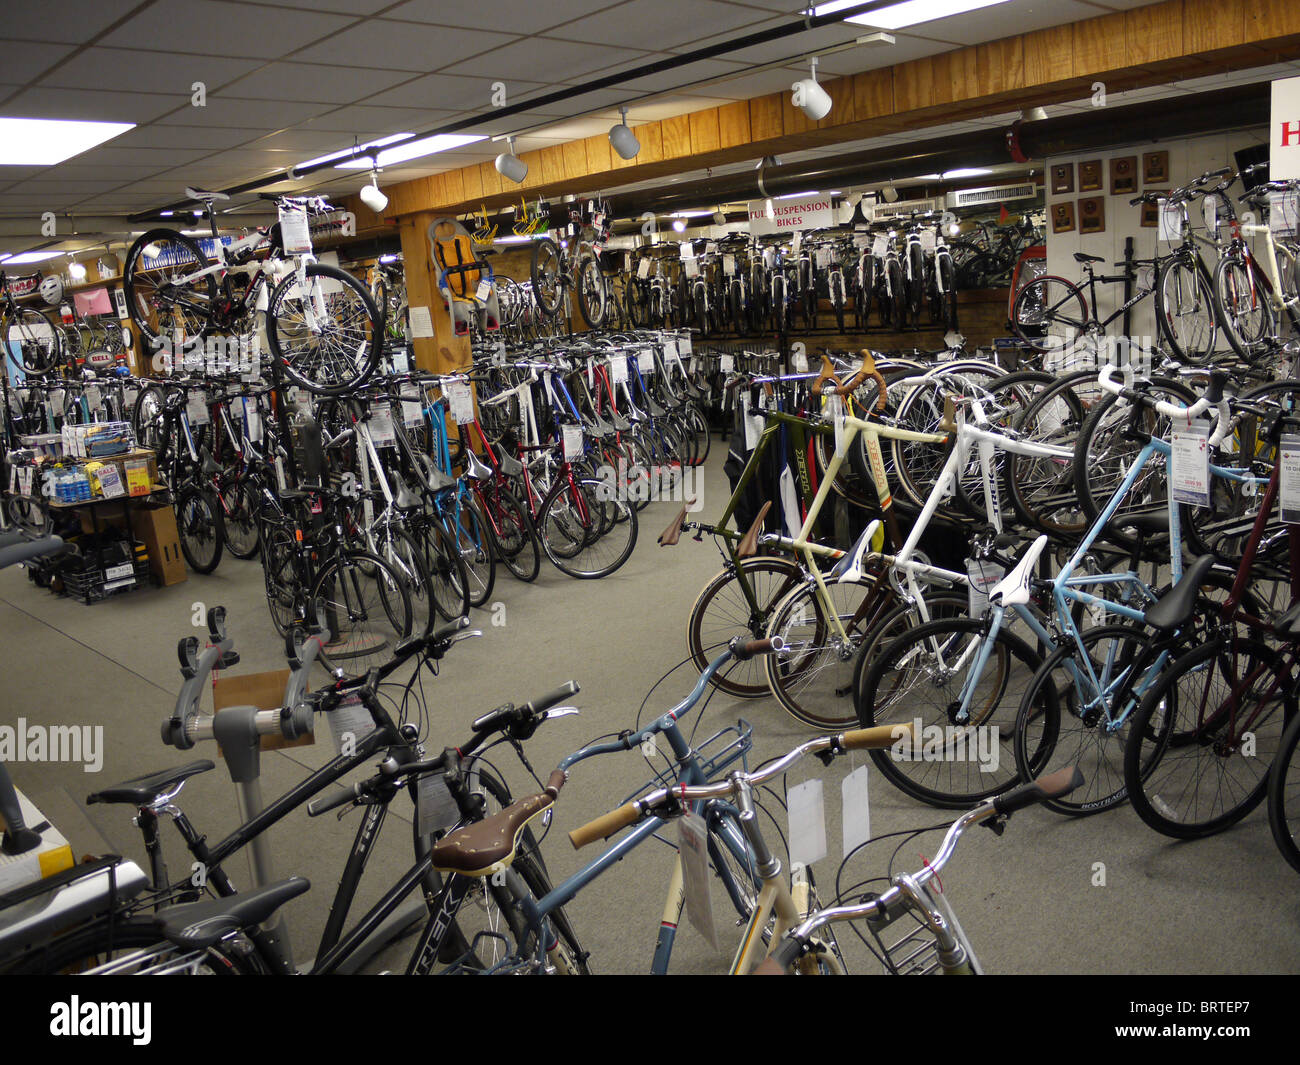 Bicycle shop interior Stock Photo - Alamy